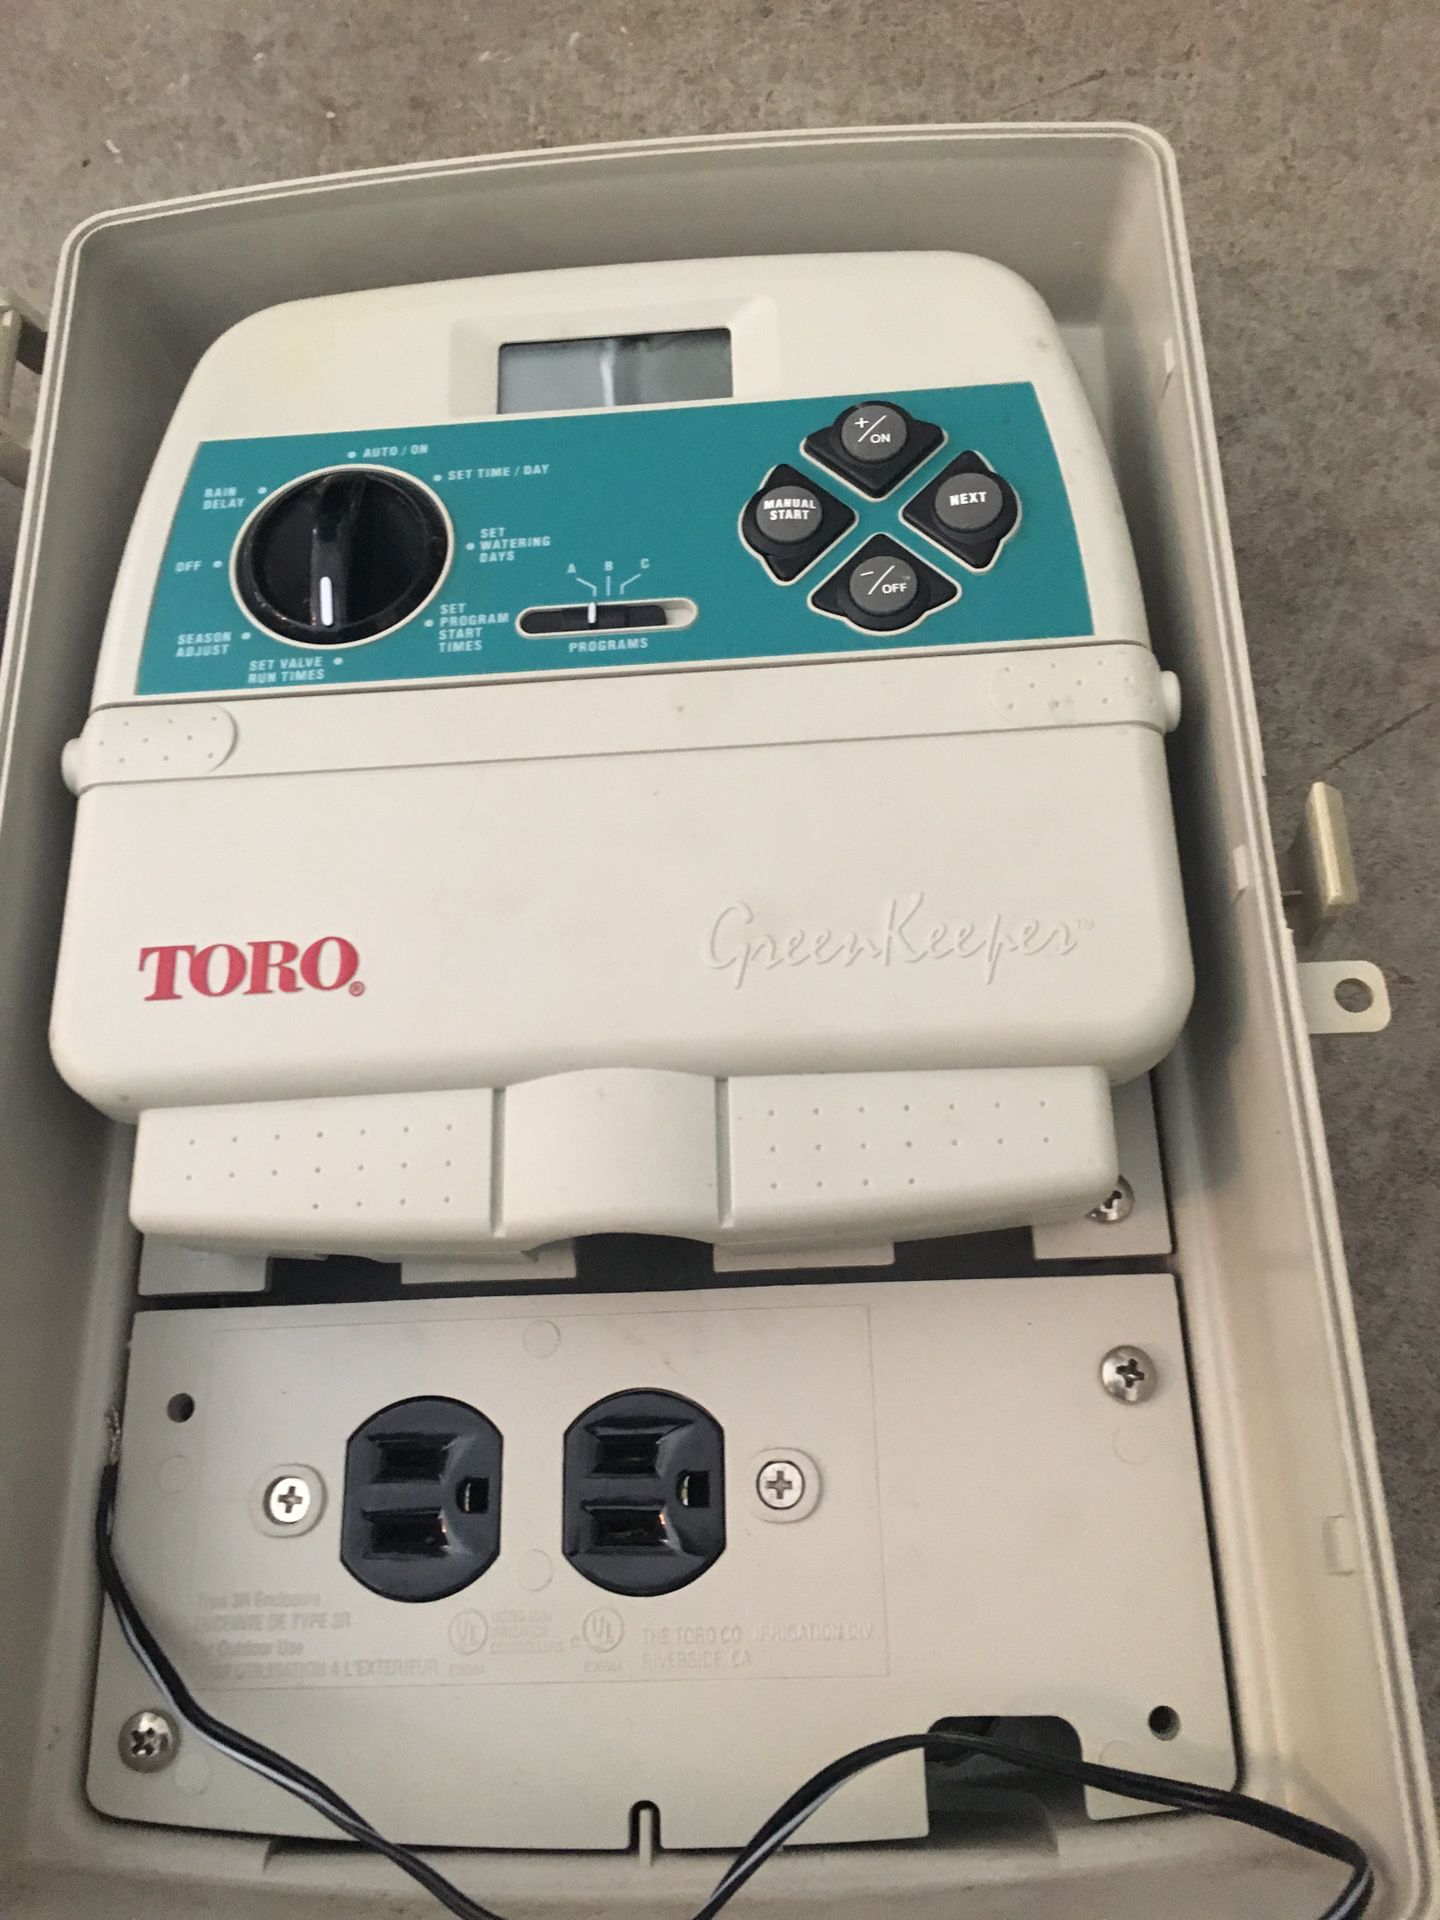 Toro greenkeeper sprinkler controller with outdoor box